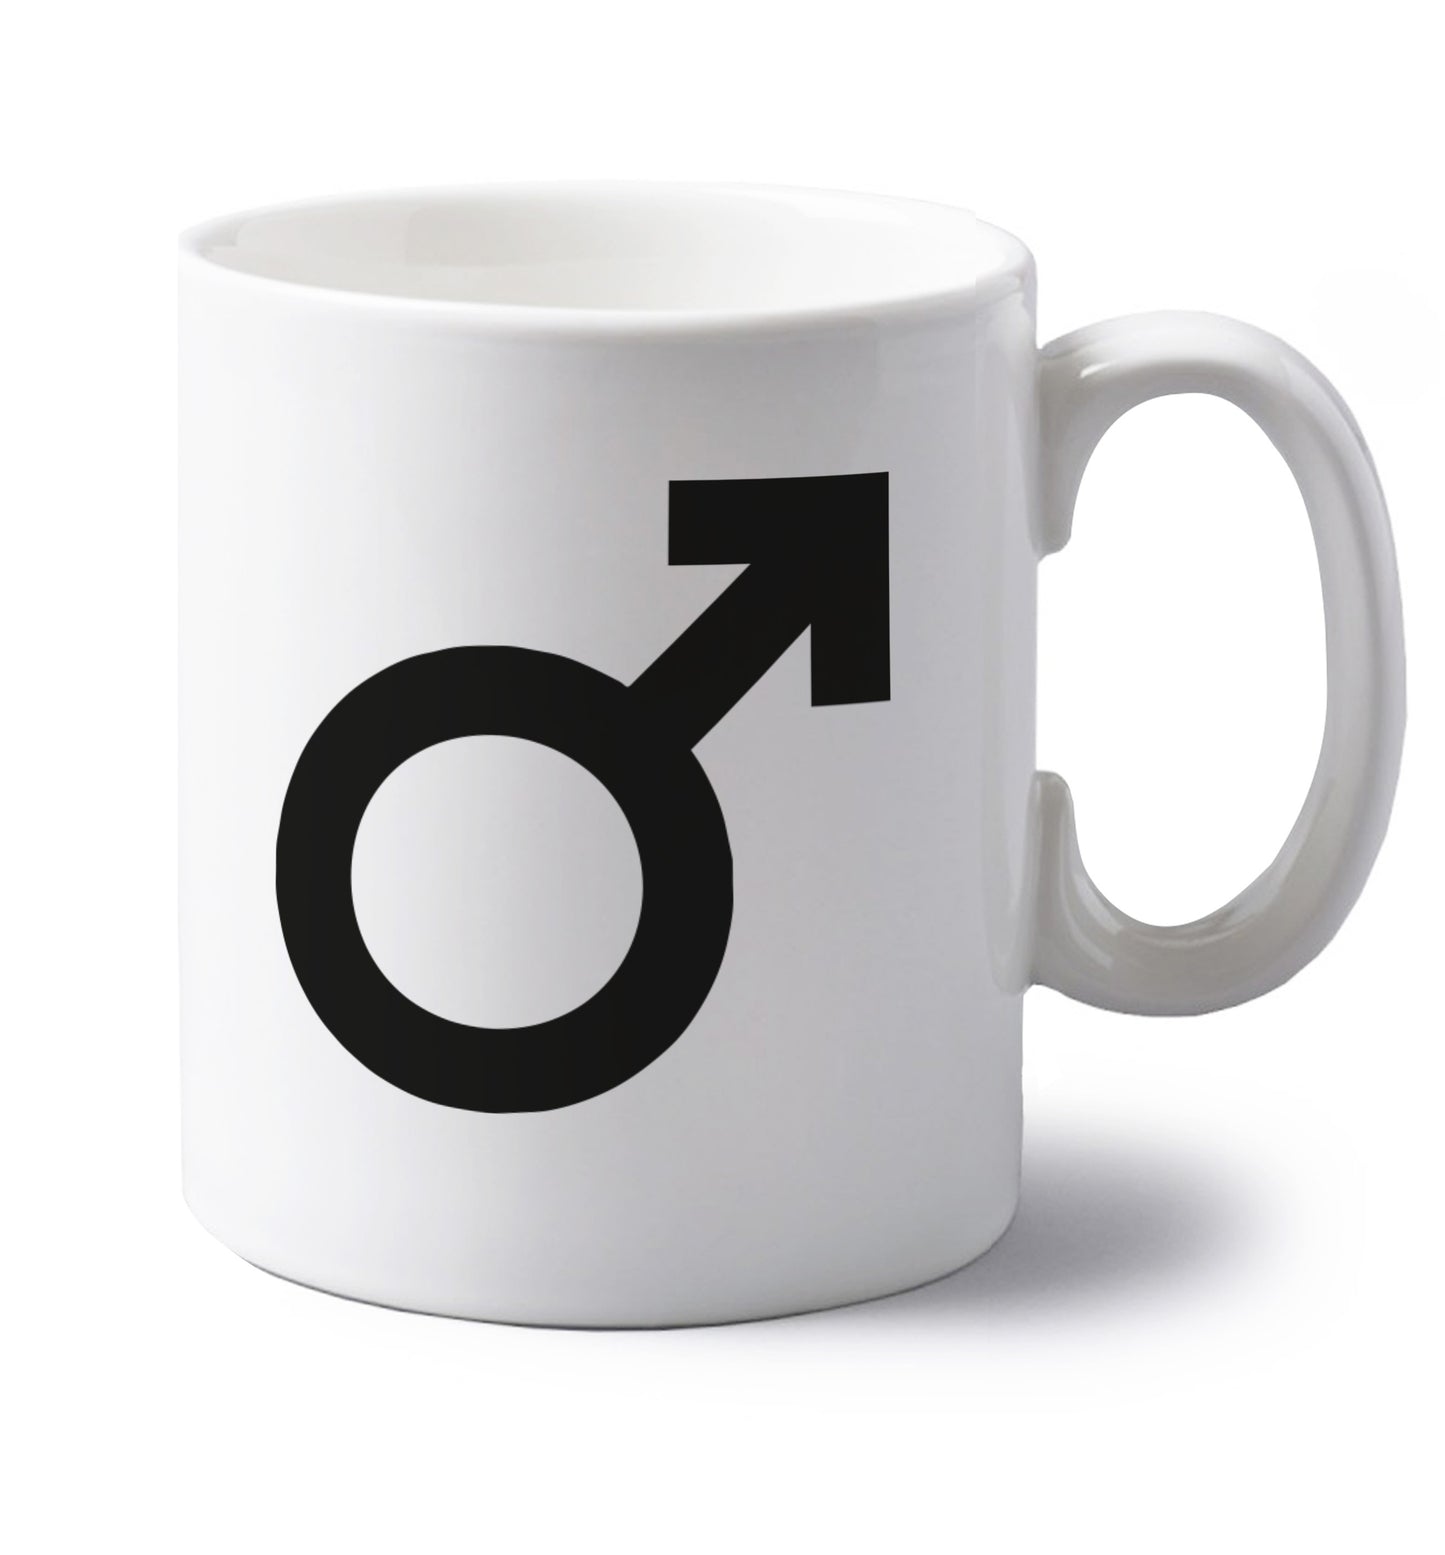 Male symbol large left handed white ceramic mug 